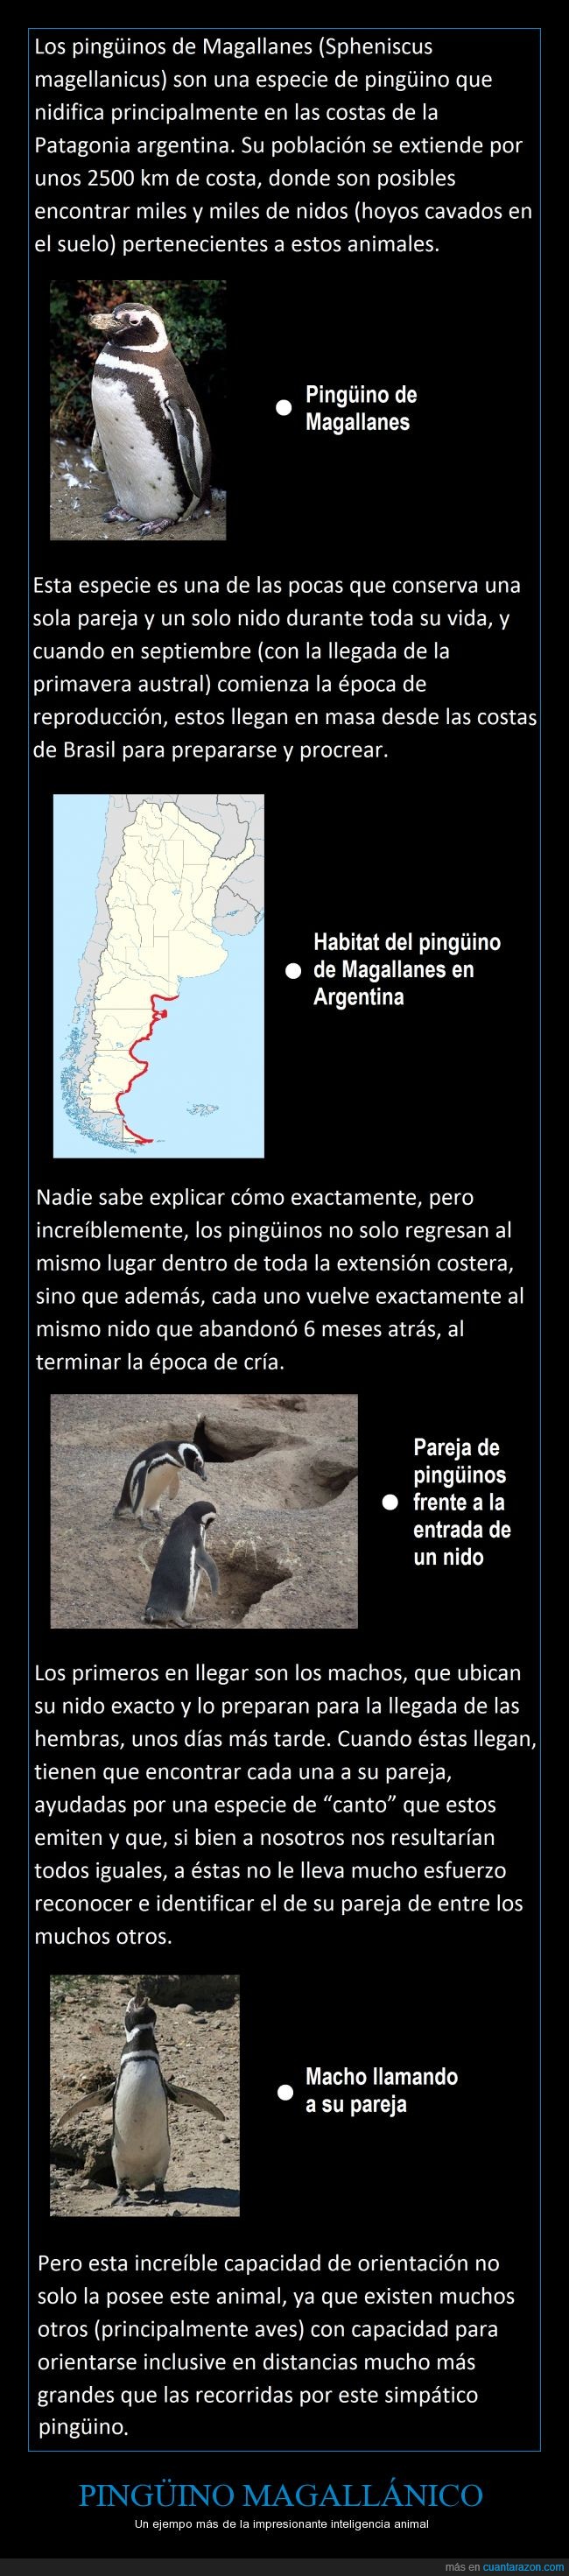 Pingüino,Magallanes,Patagonia,nido,animal,Argentina,Brasil,distancia,magallánico,encontrar,pareja